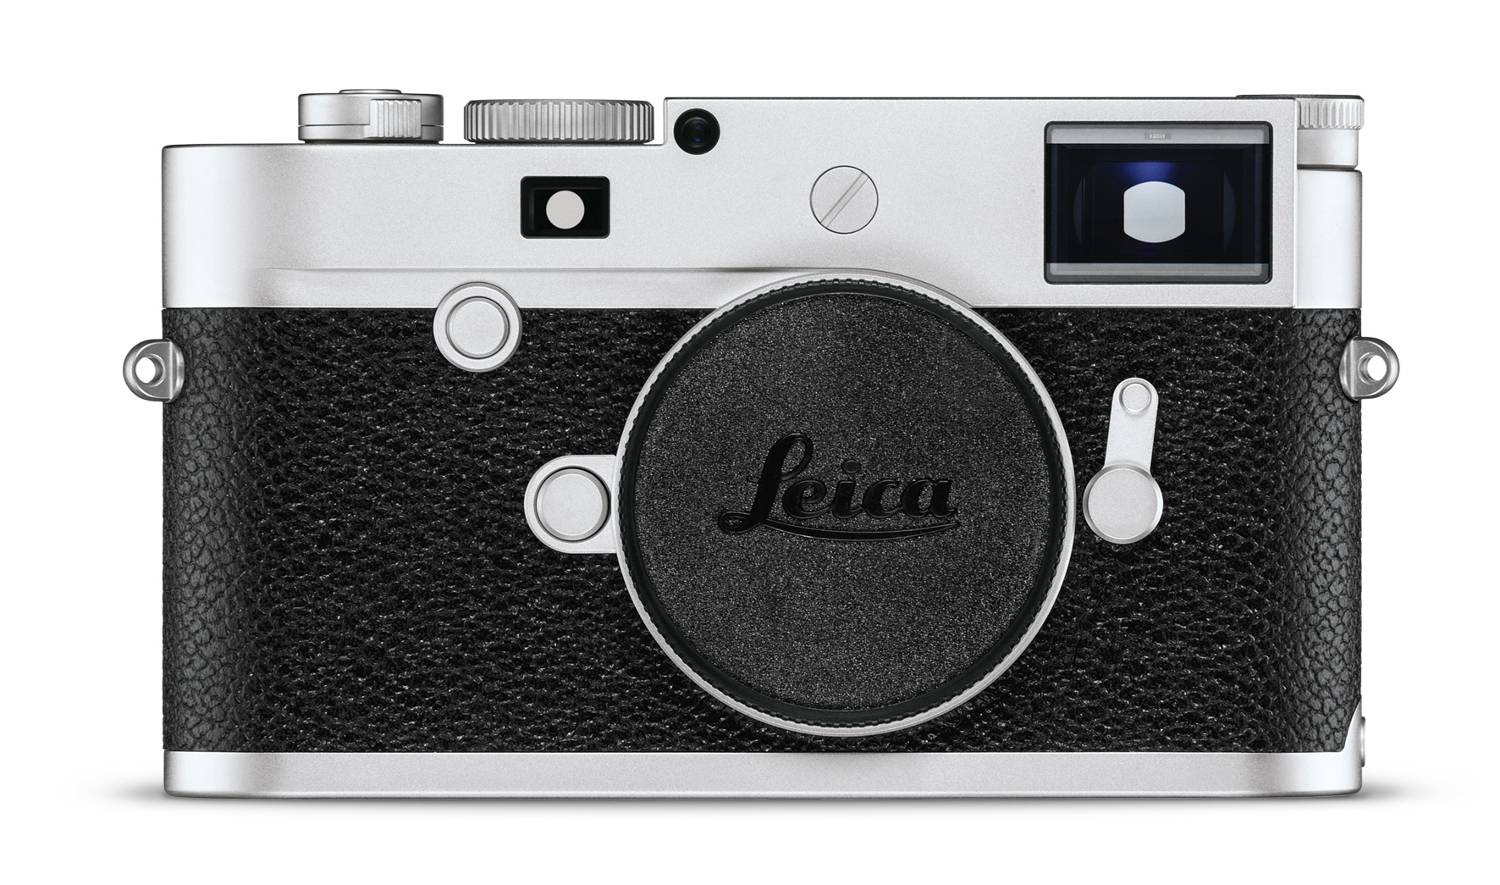 Leica M10-P Digital Rangefinder Camera Body (Silver Chrome)